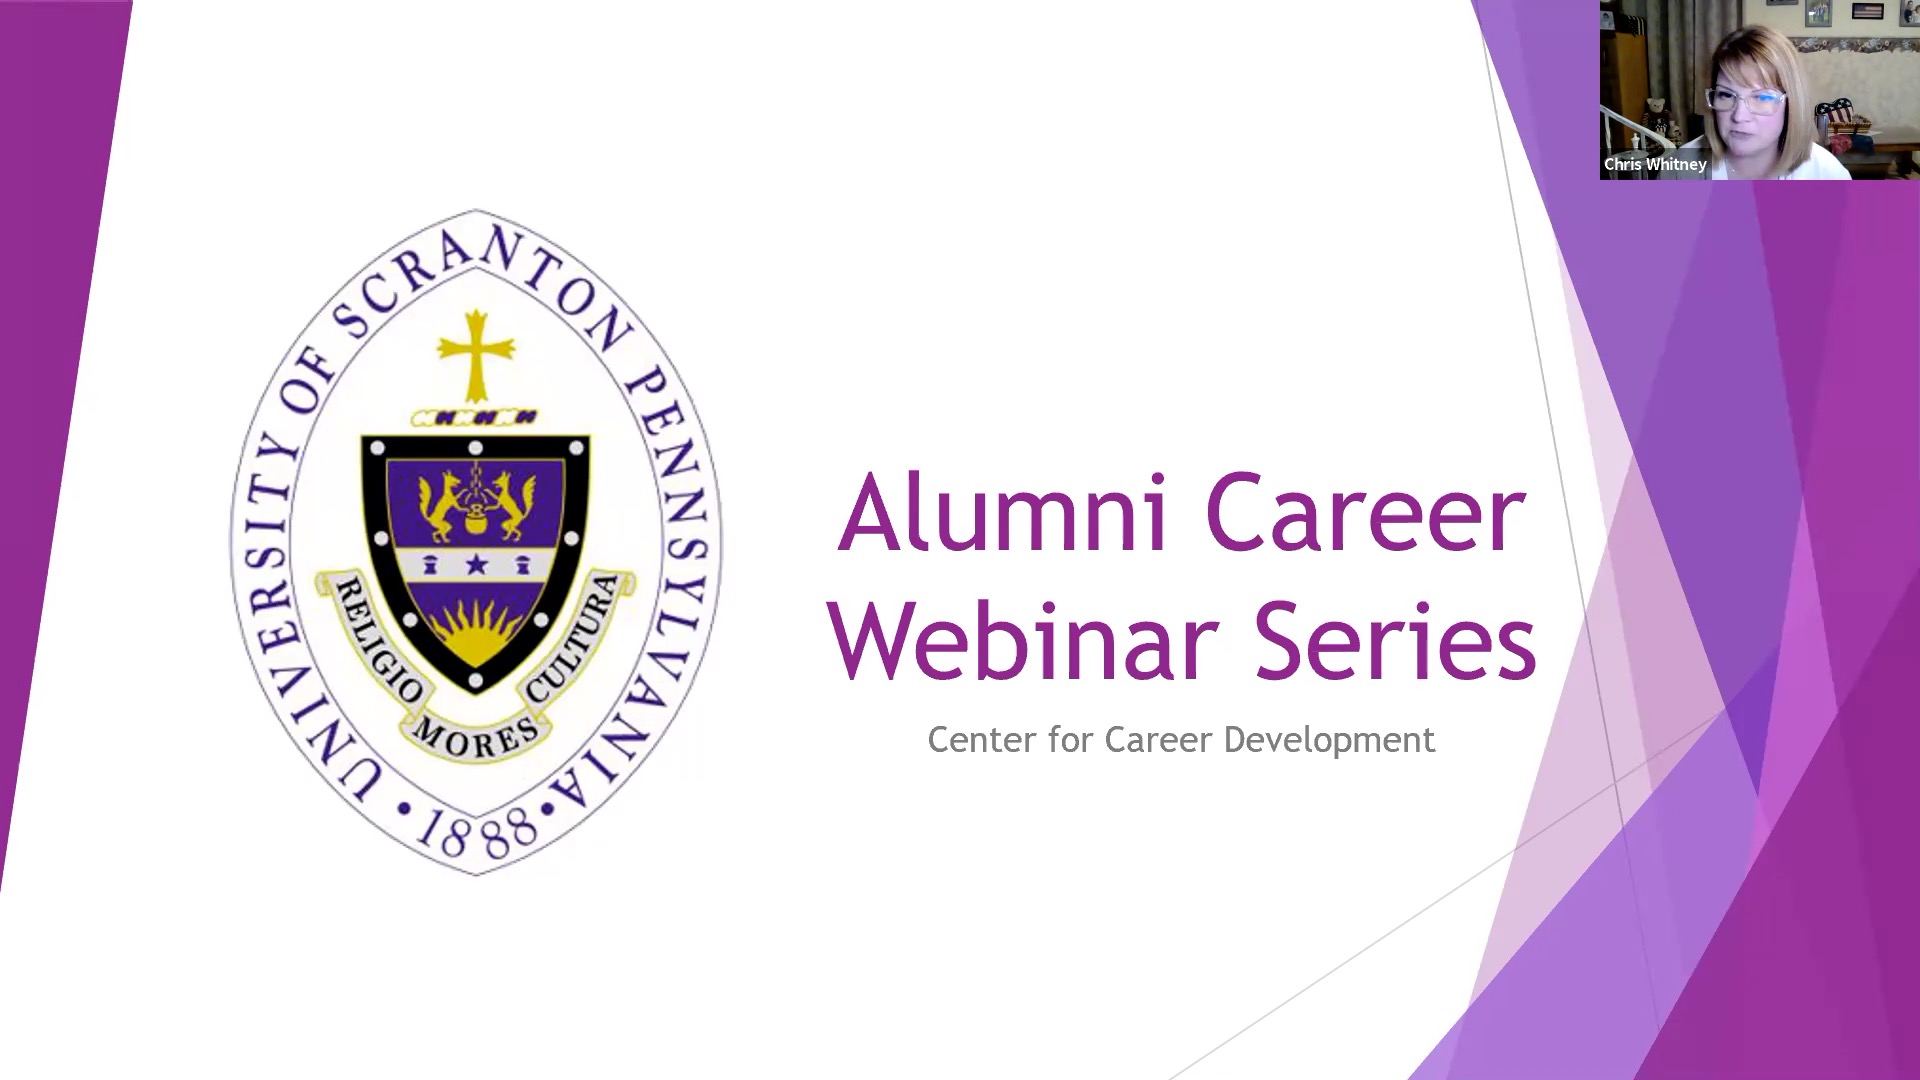 University Continues Alumni Career Development Webinar Series March 31